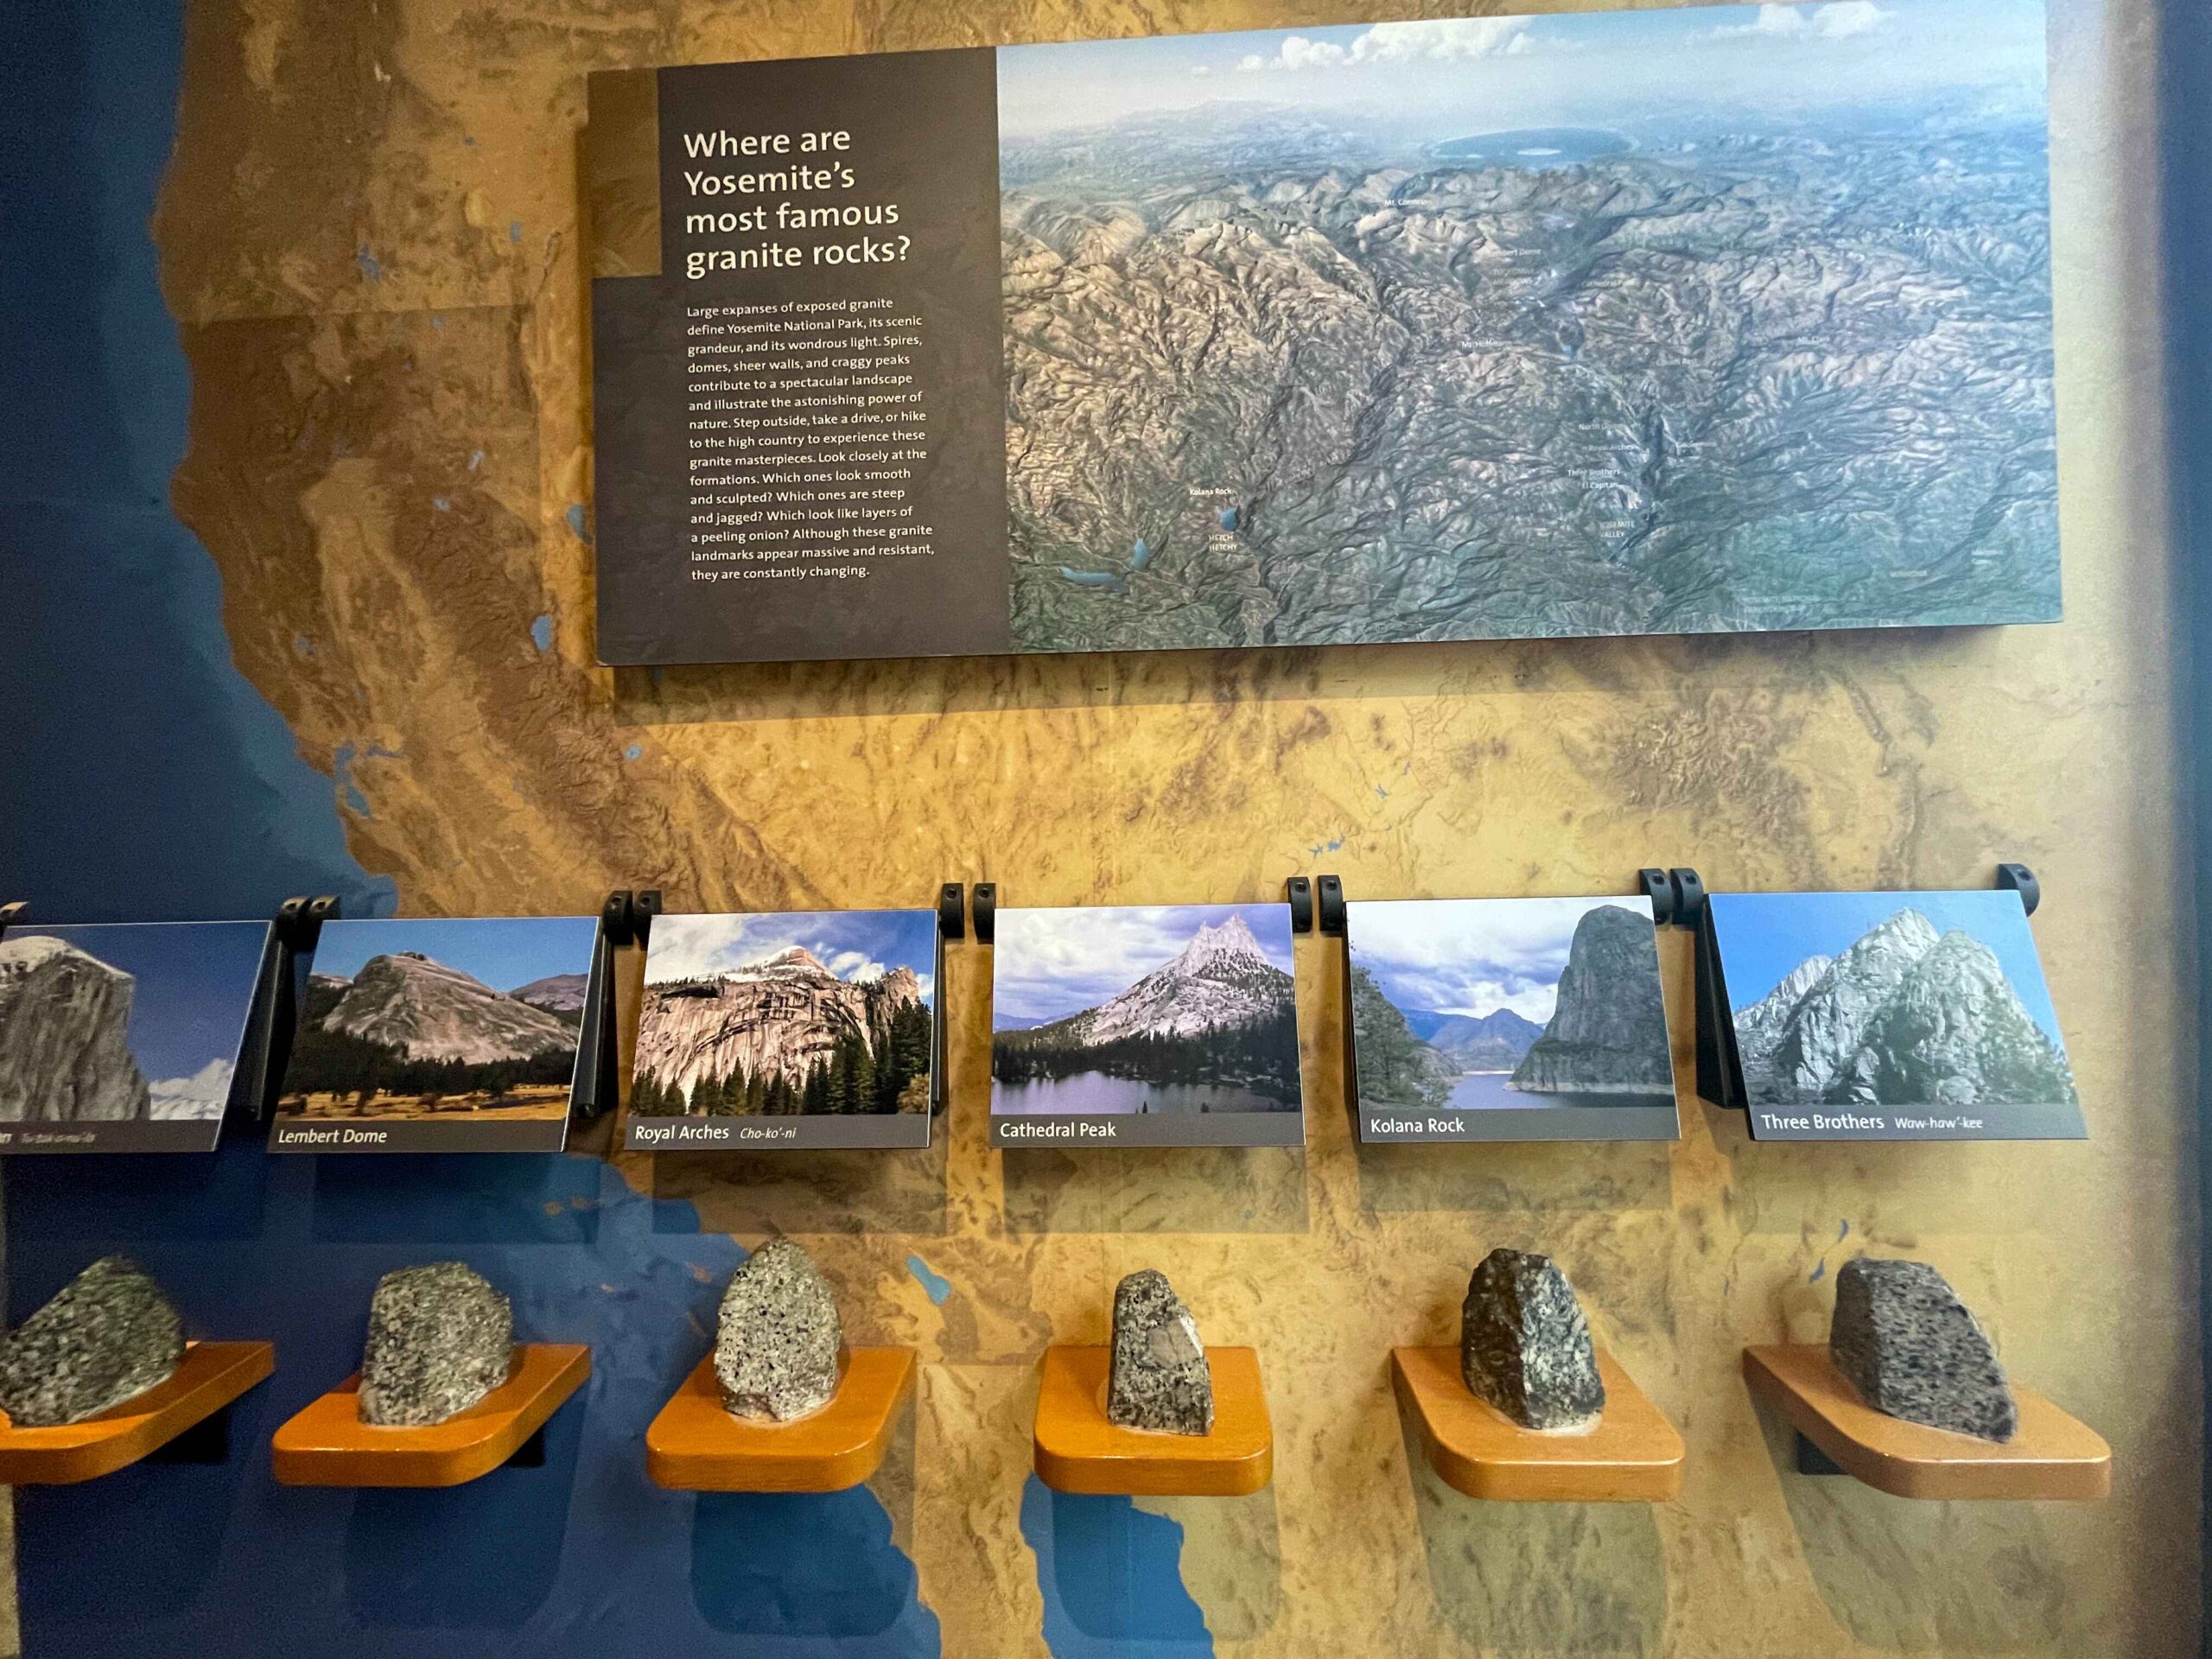 Yosemite Visitor Center